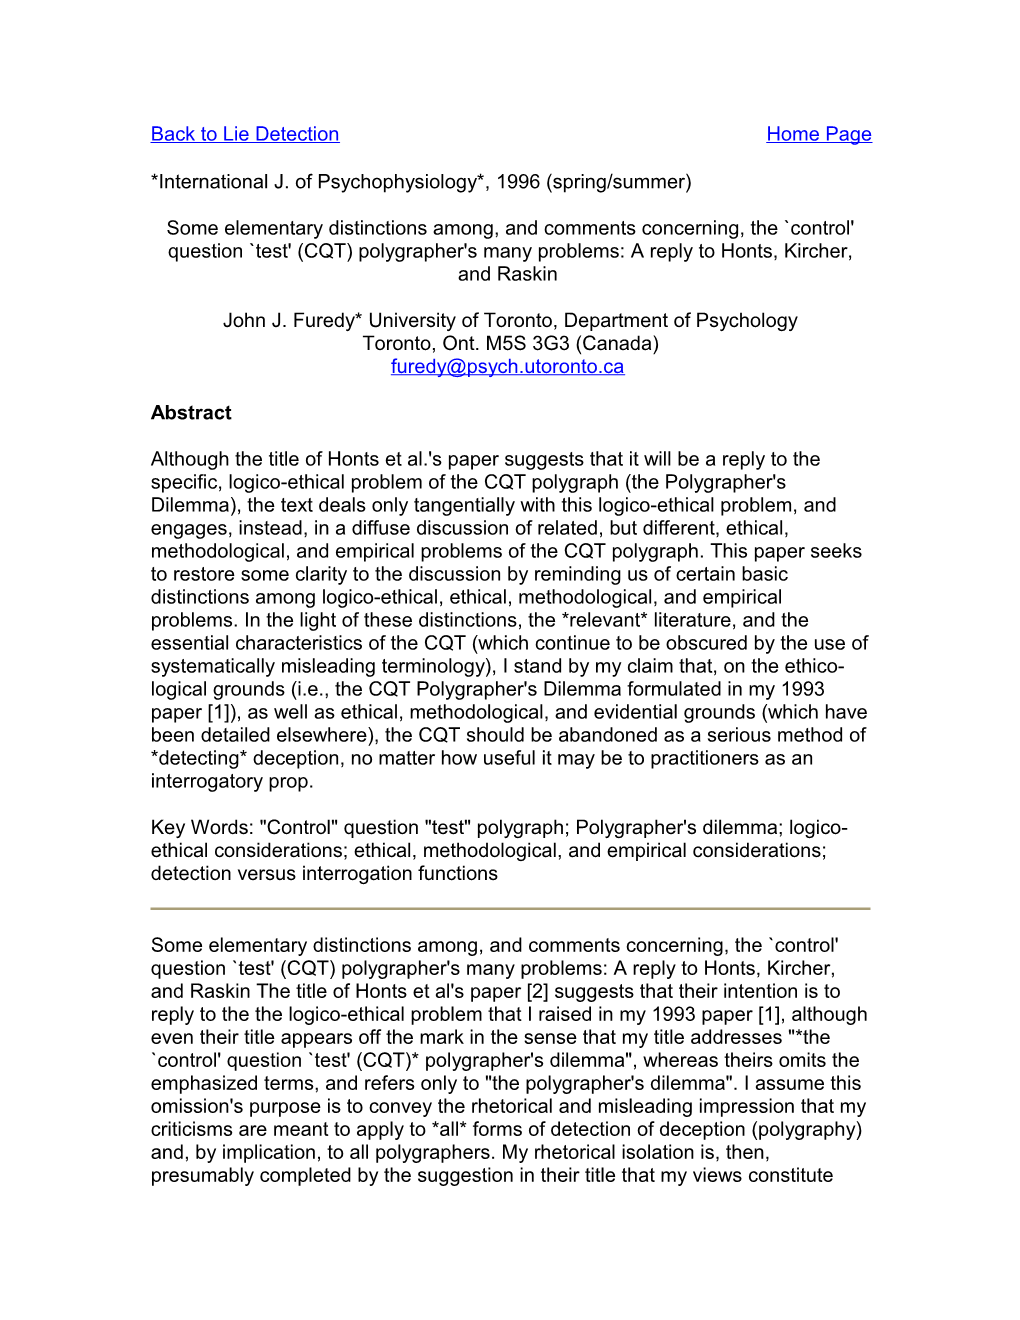 *International J. of Psychophysiology*, 1996 (Spring/Summer)